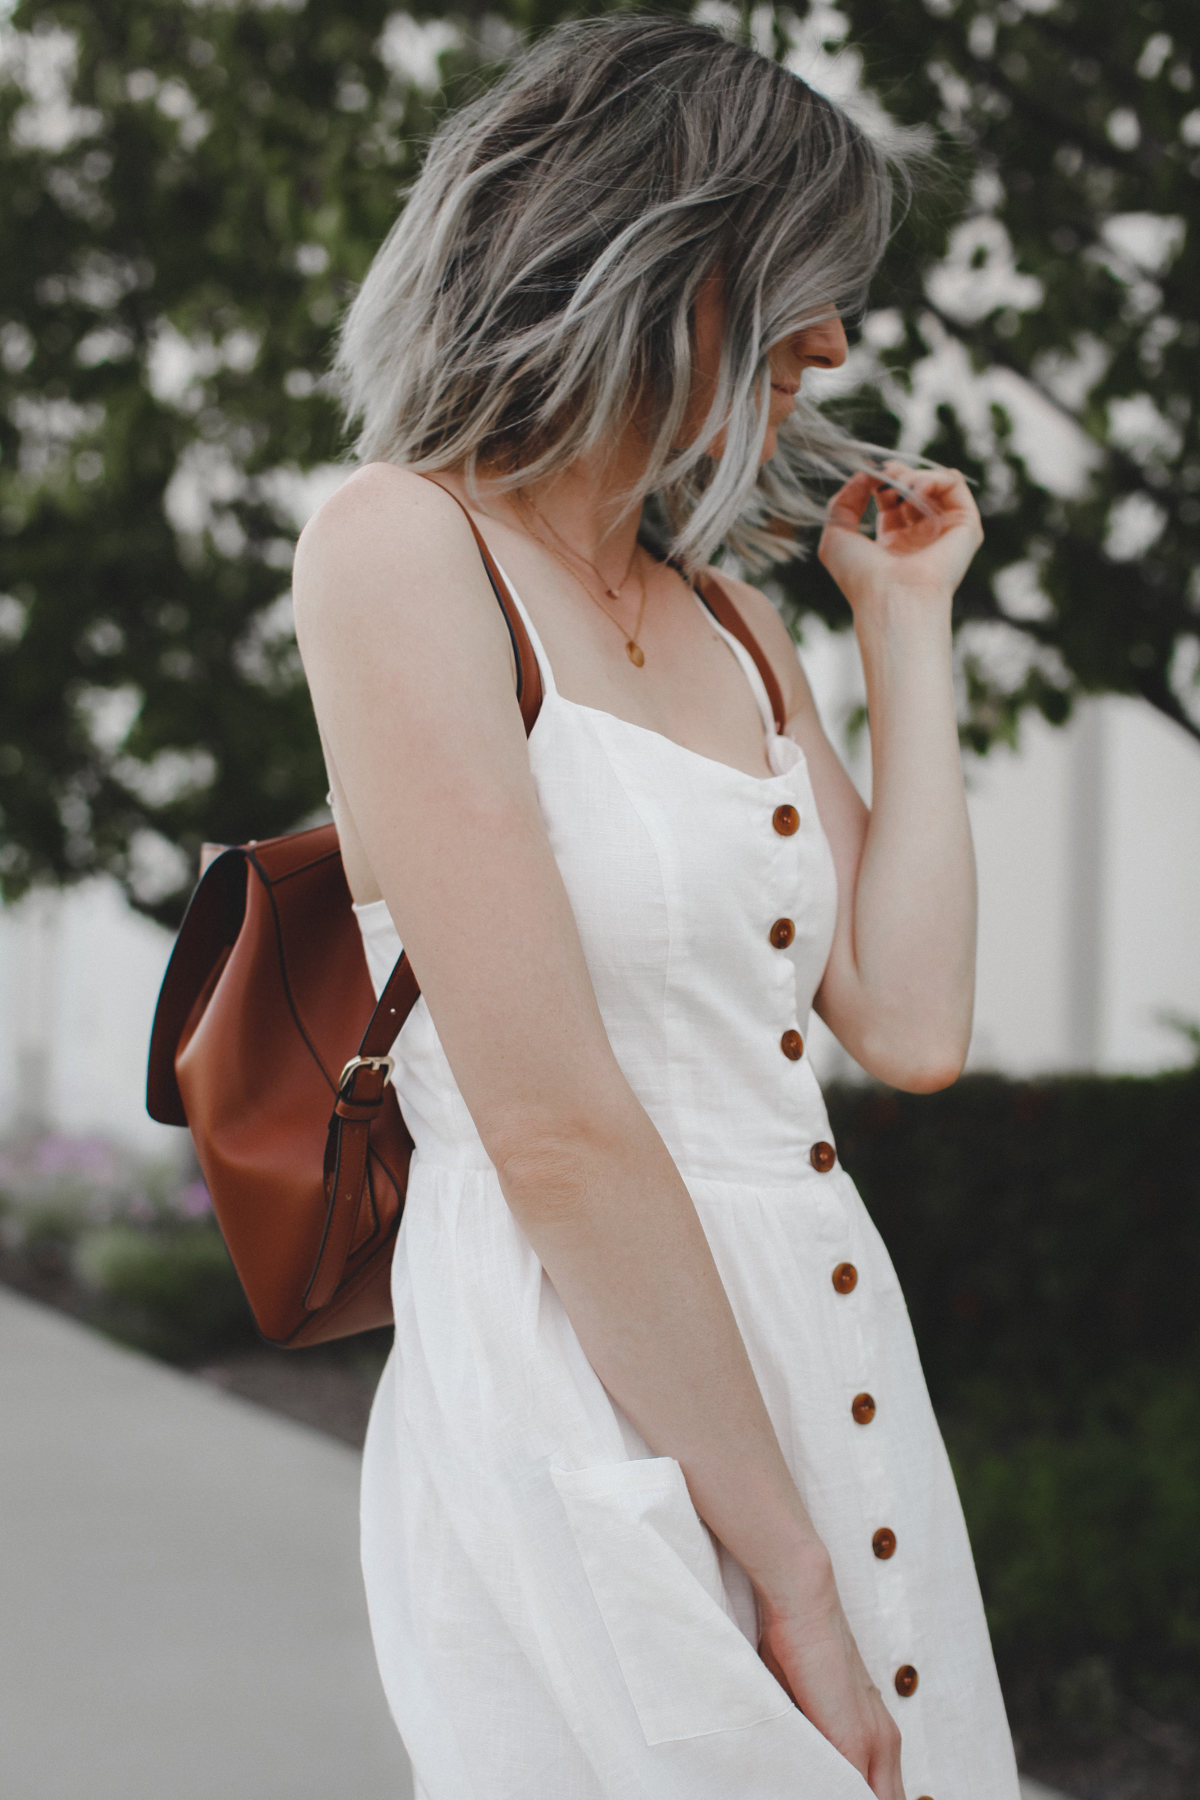 Short grey hair and white dress